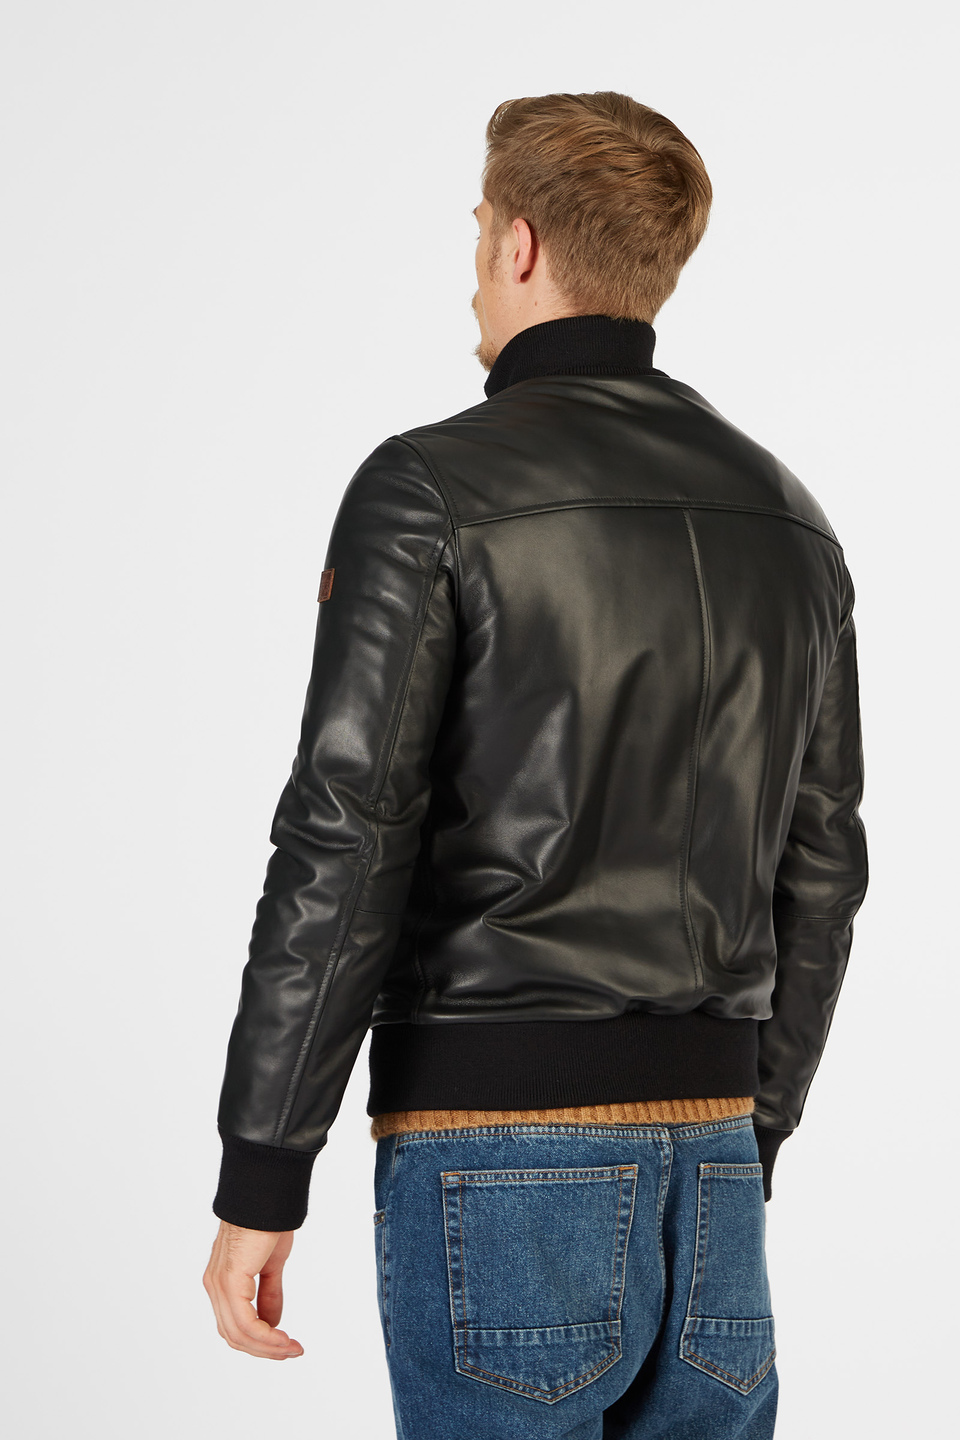 Blue Ribbon leather jacket with regular fit zip front closure | La Martina - Official Online Shop